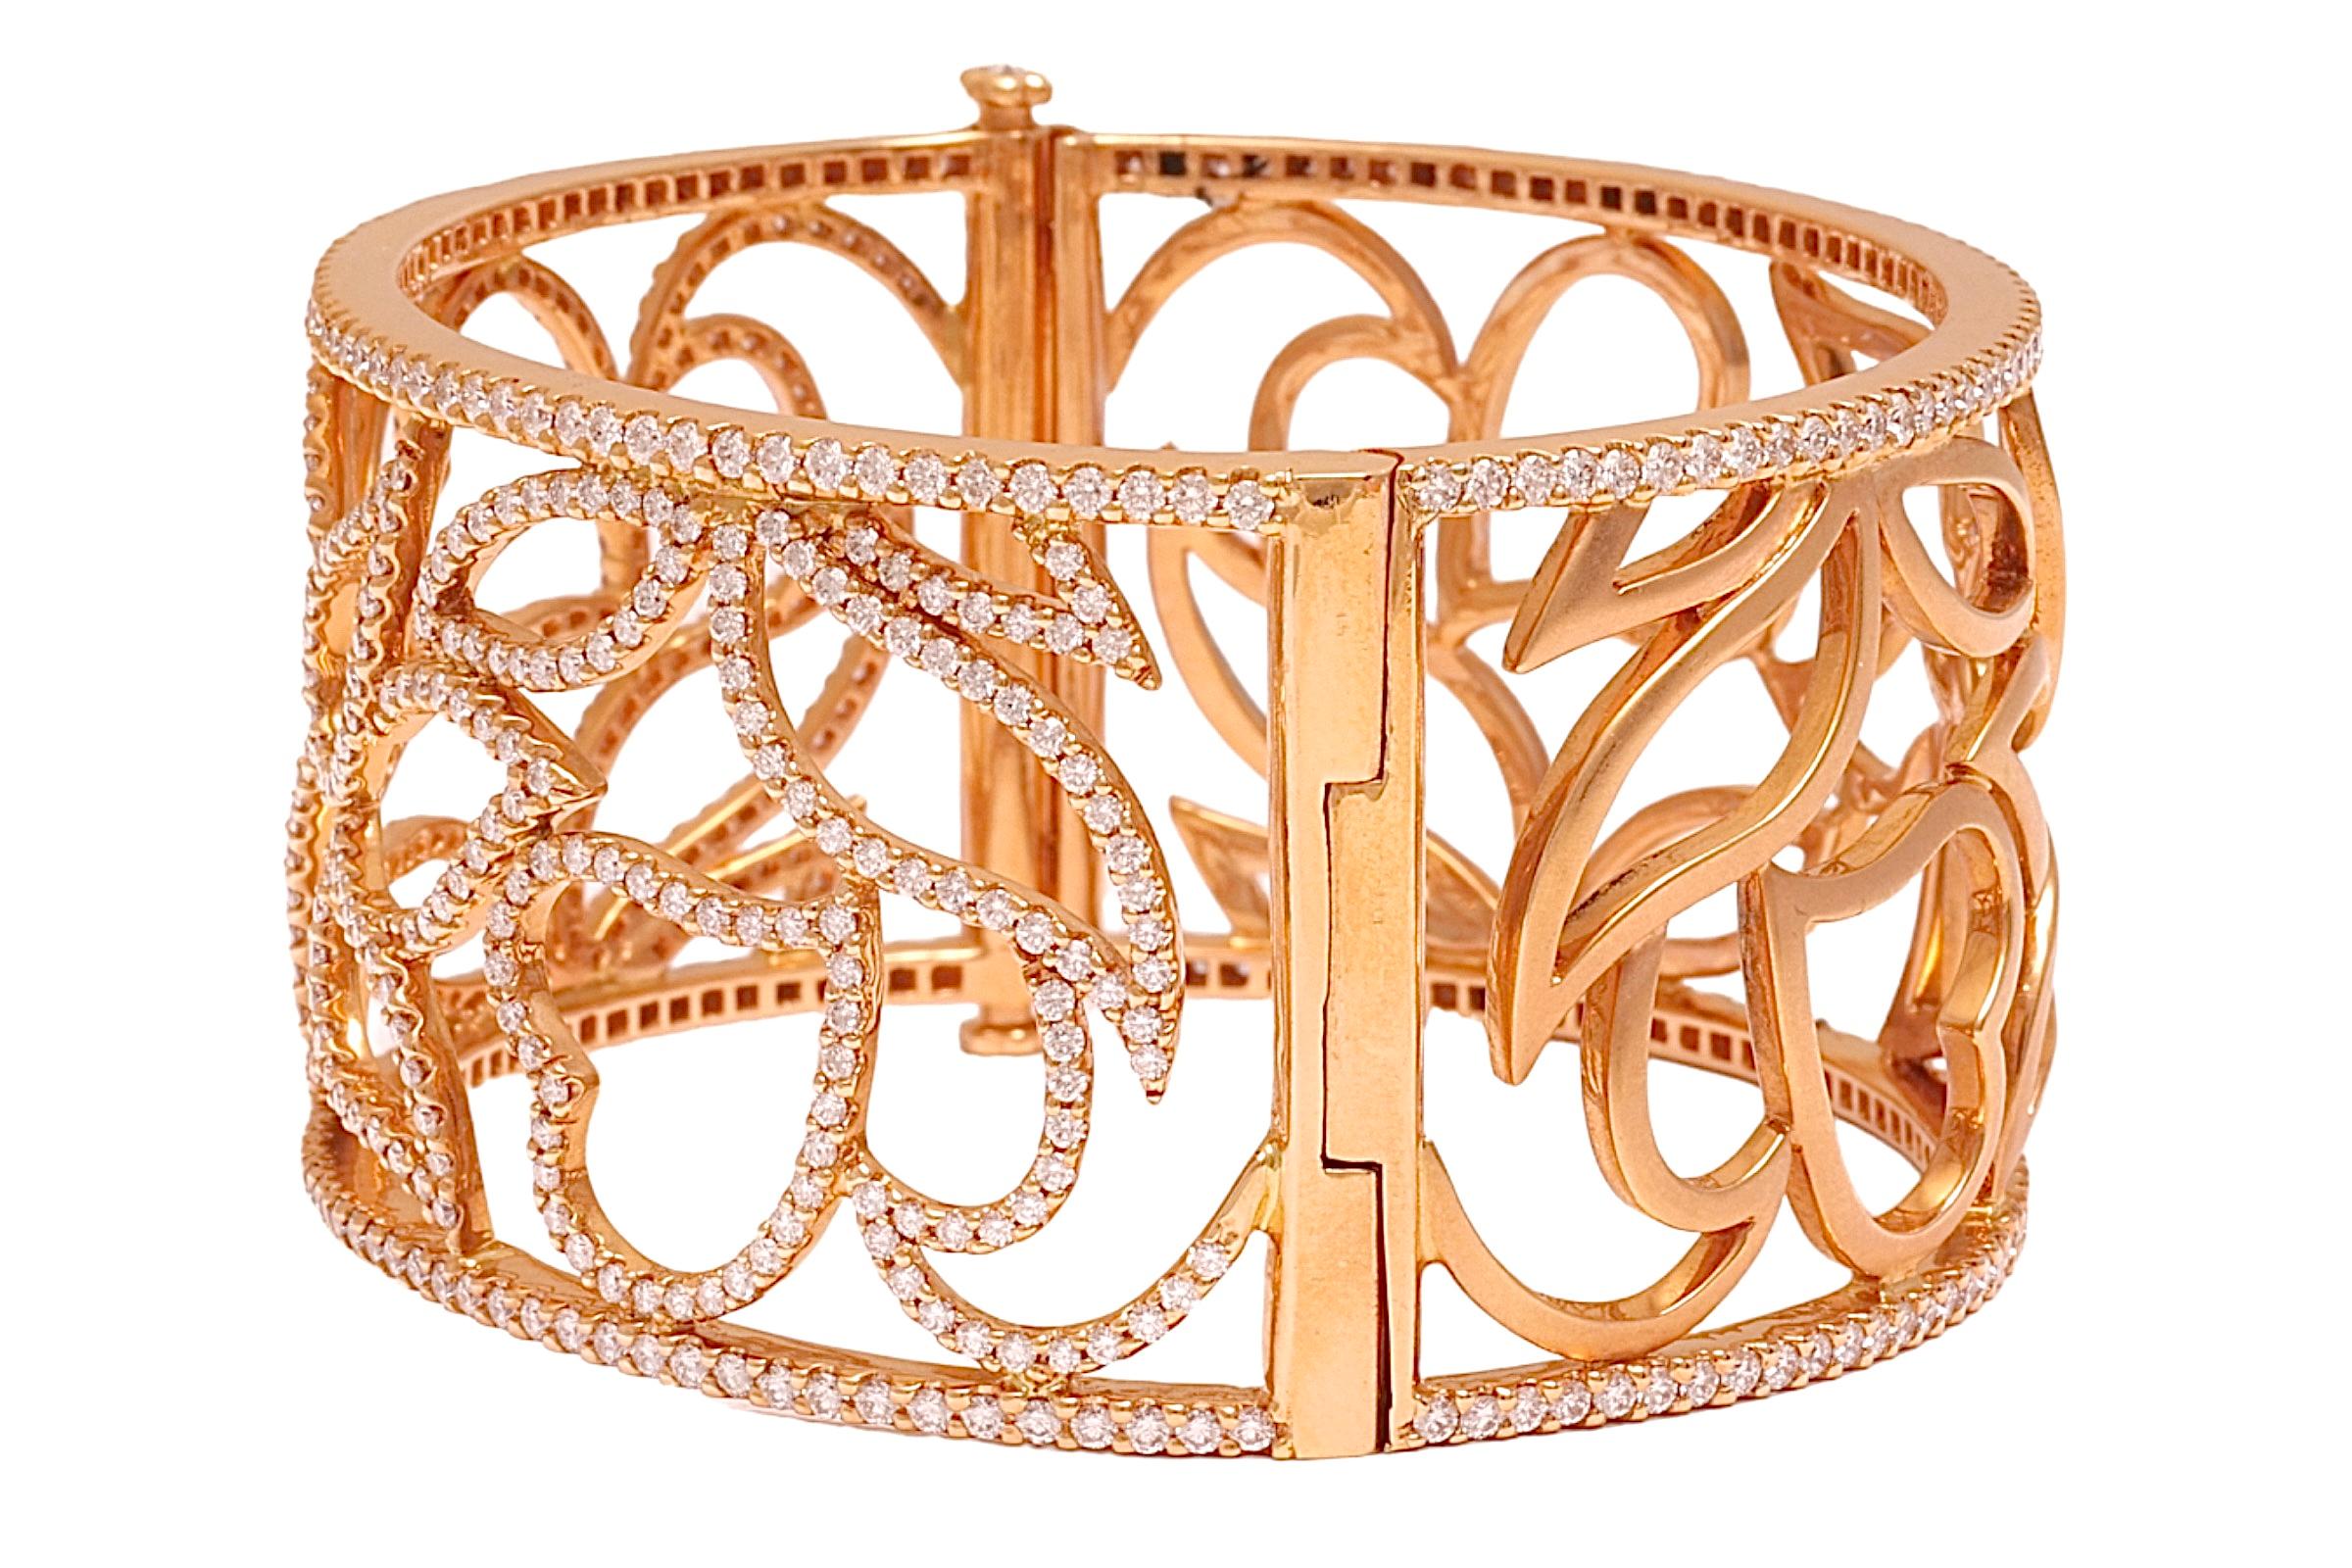 18kt Pink Gold Cuff Bracelet, Flower Design, set with 5.87 ct. Diamonds, 2 Sided For Sale 3